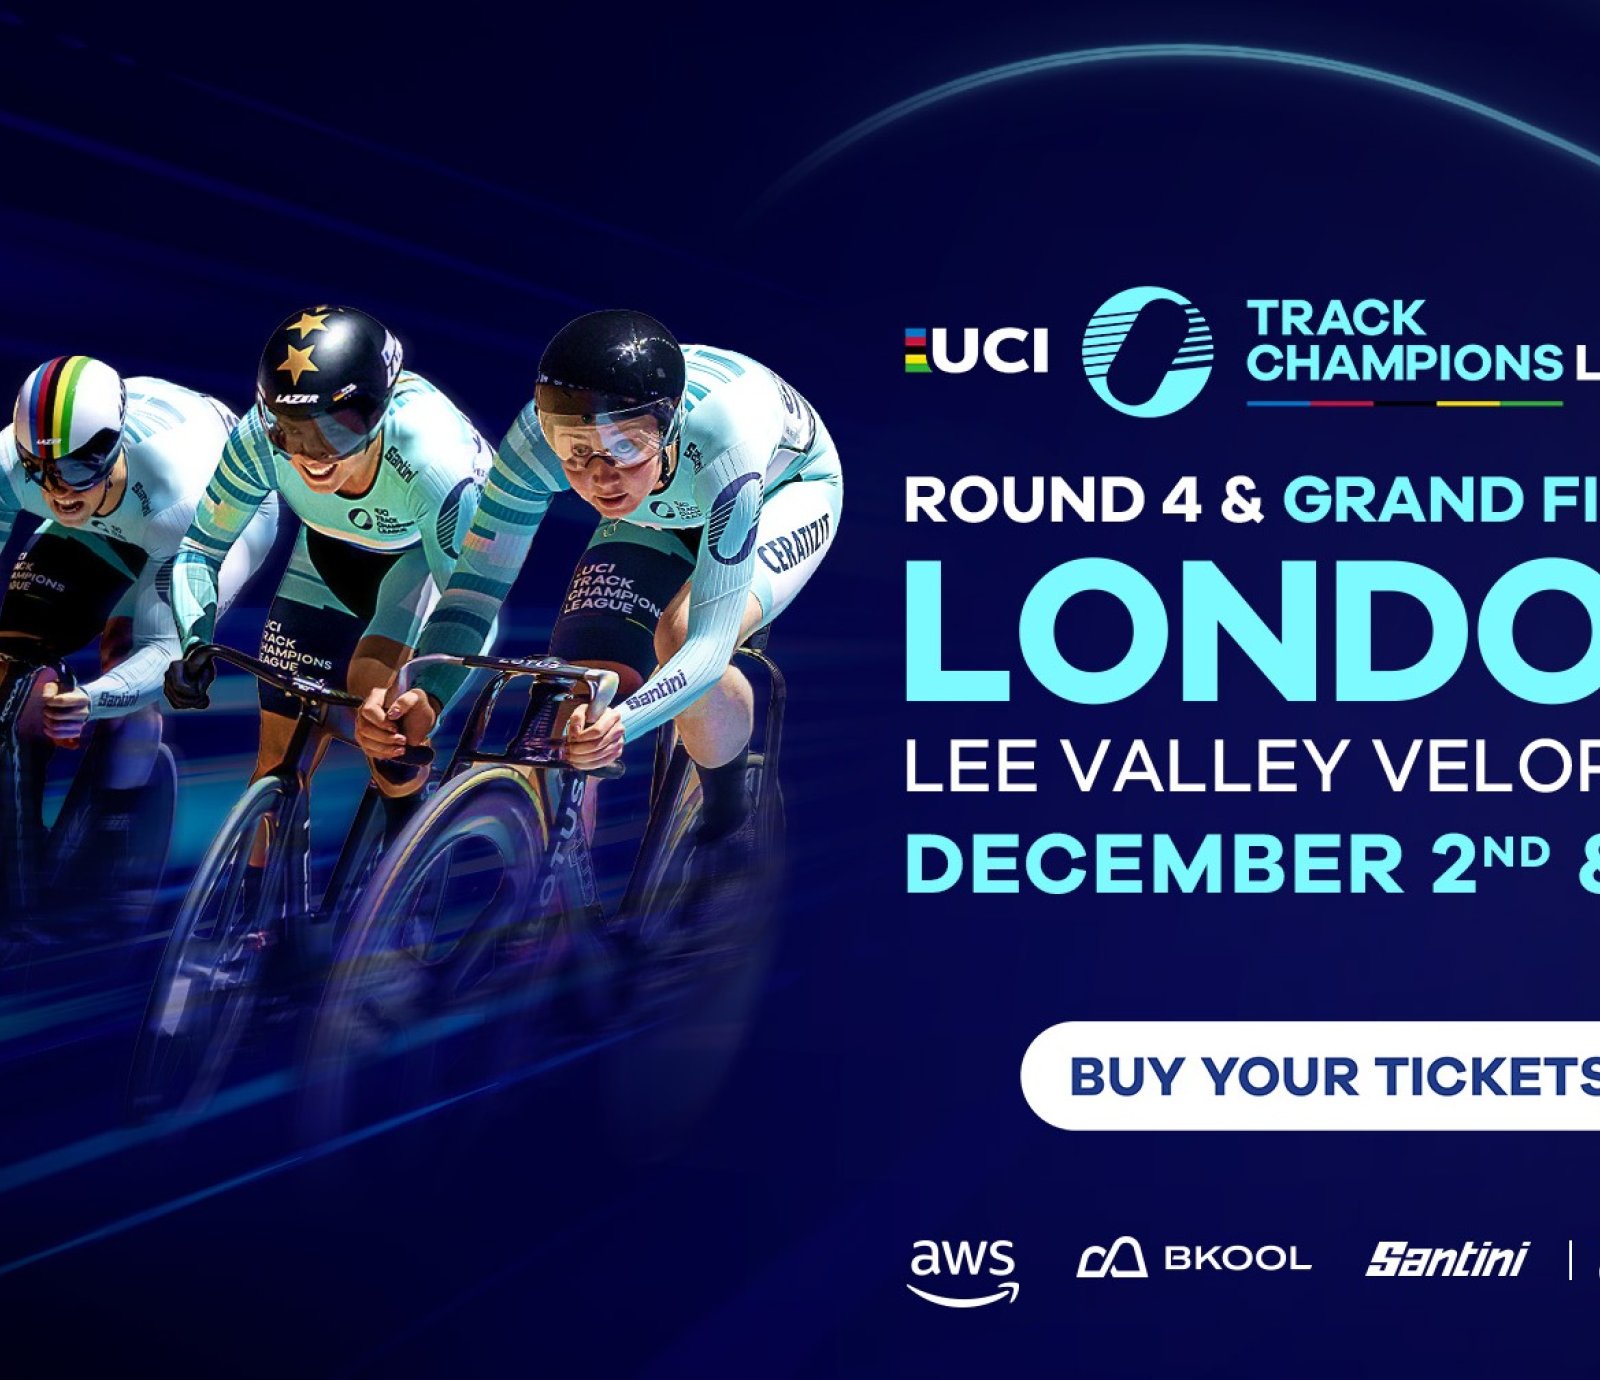 UCI Track Champions League